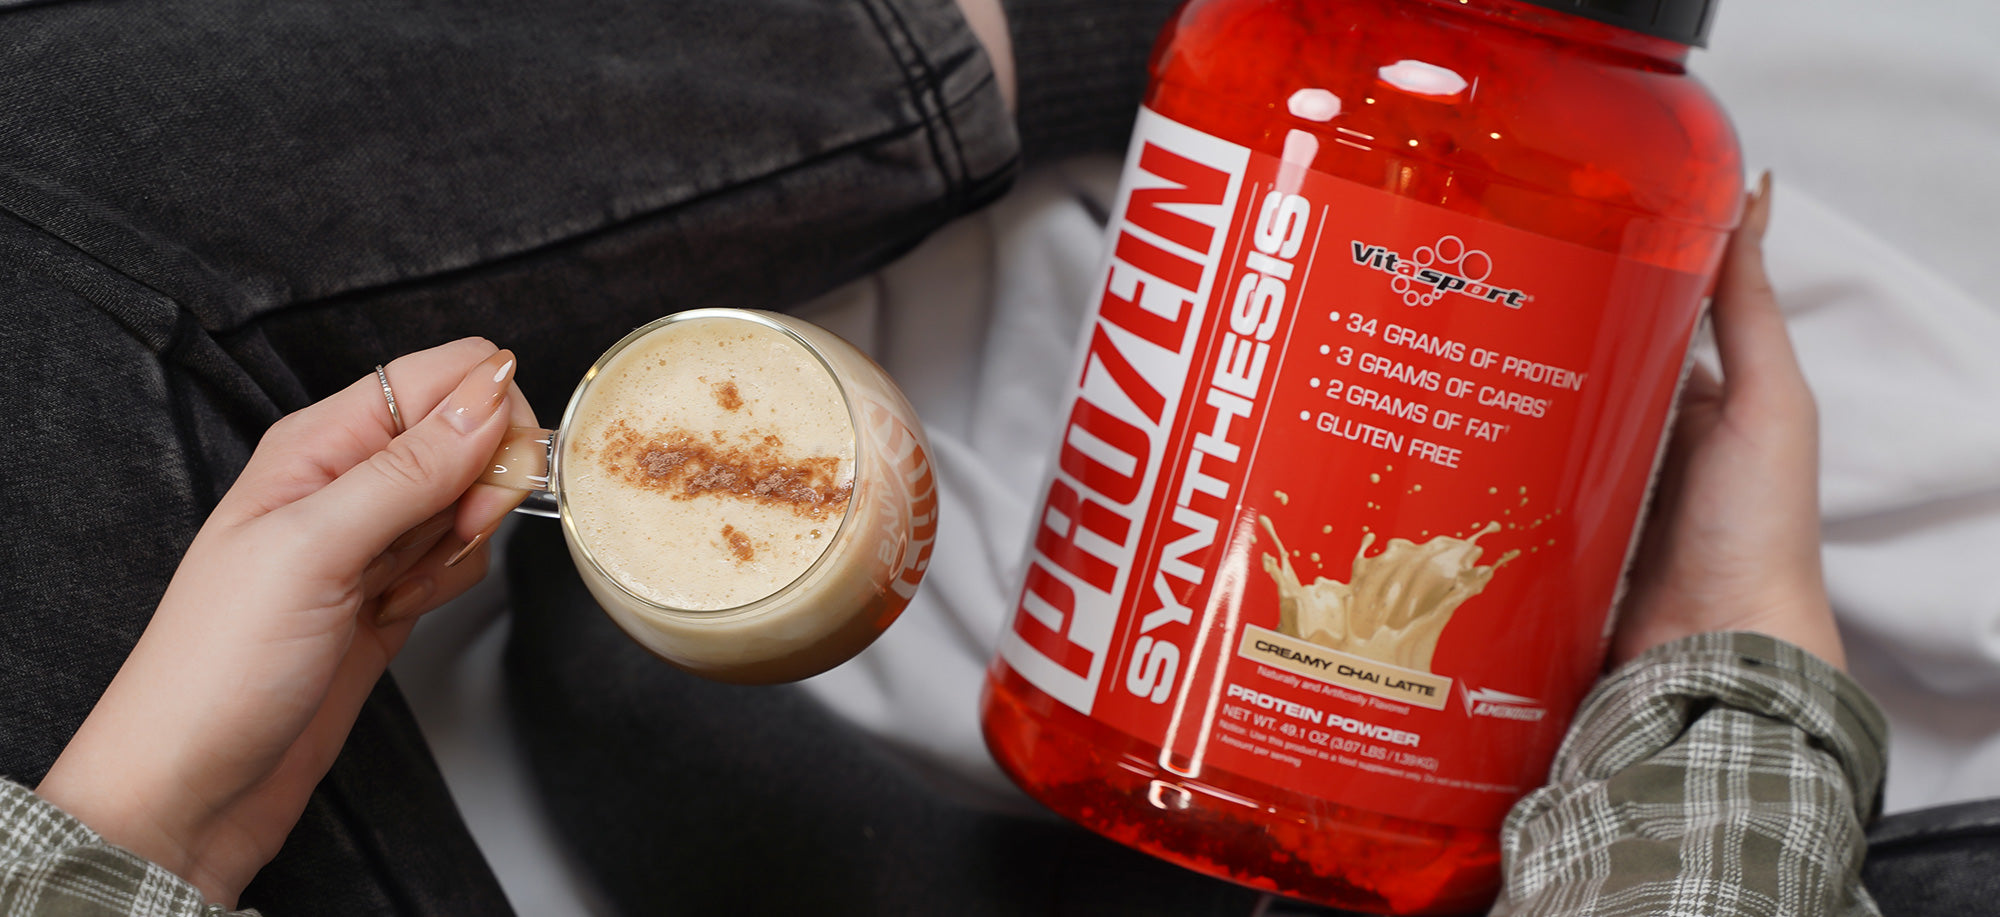 NUTRISHOP® Celebrates Fall with New Creamy Chai Latte Protein Powder